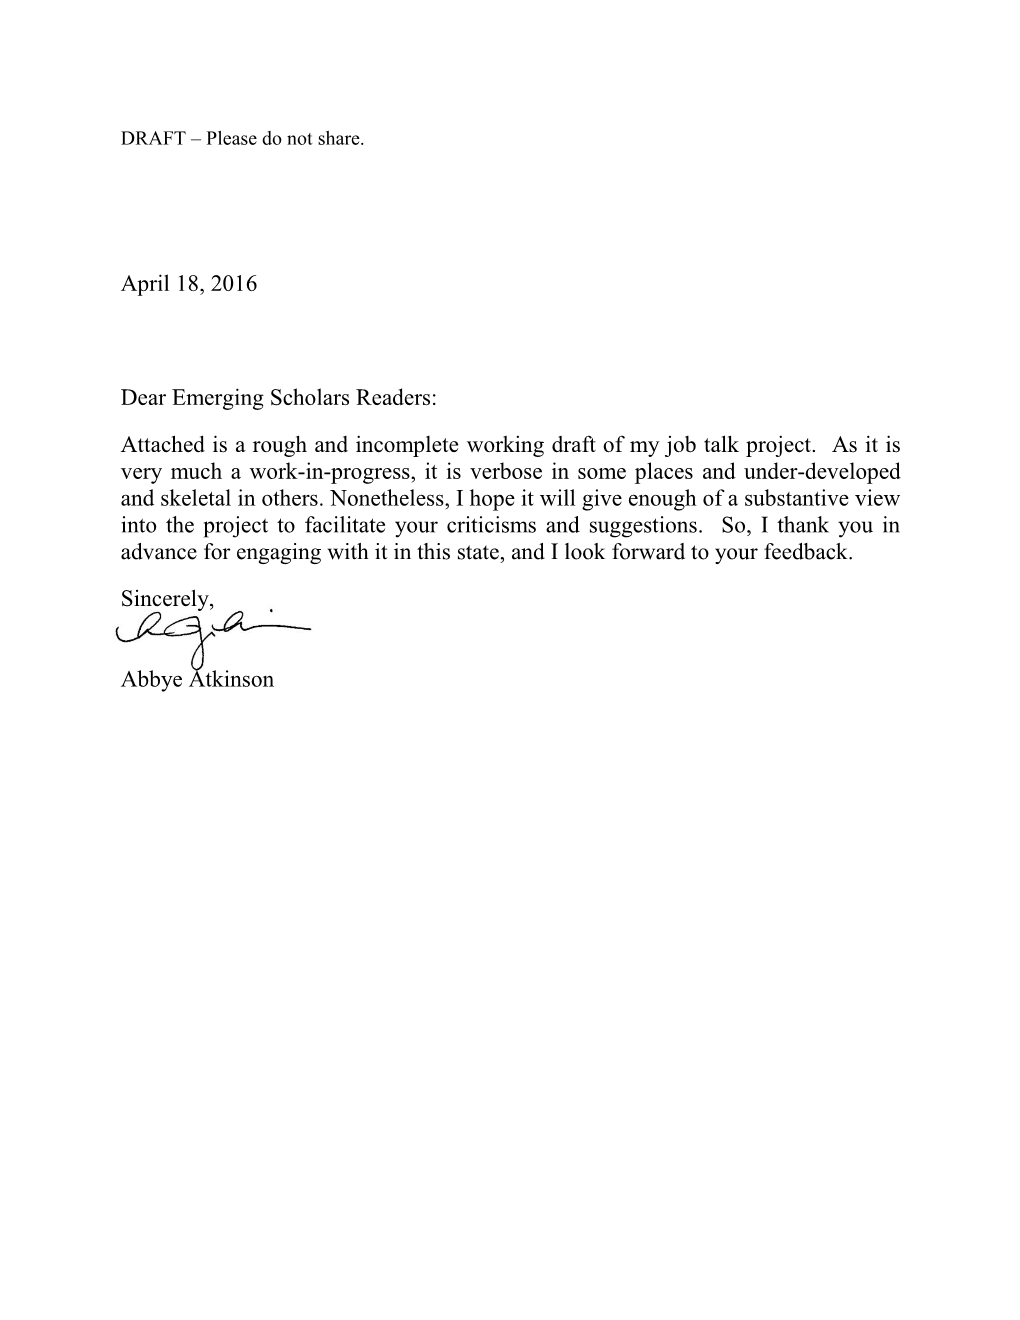 April 18, 2016 Dear Emerging Scholars